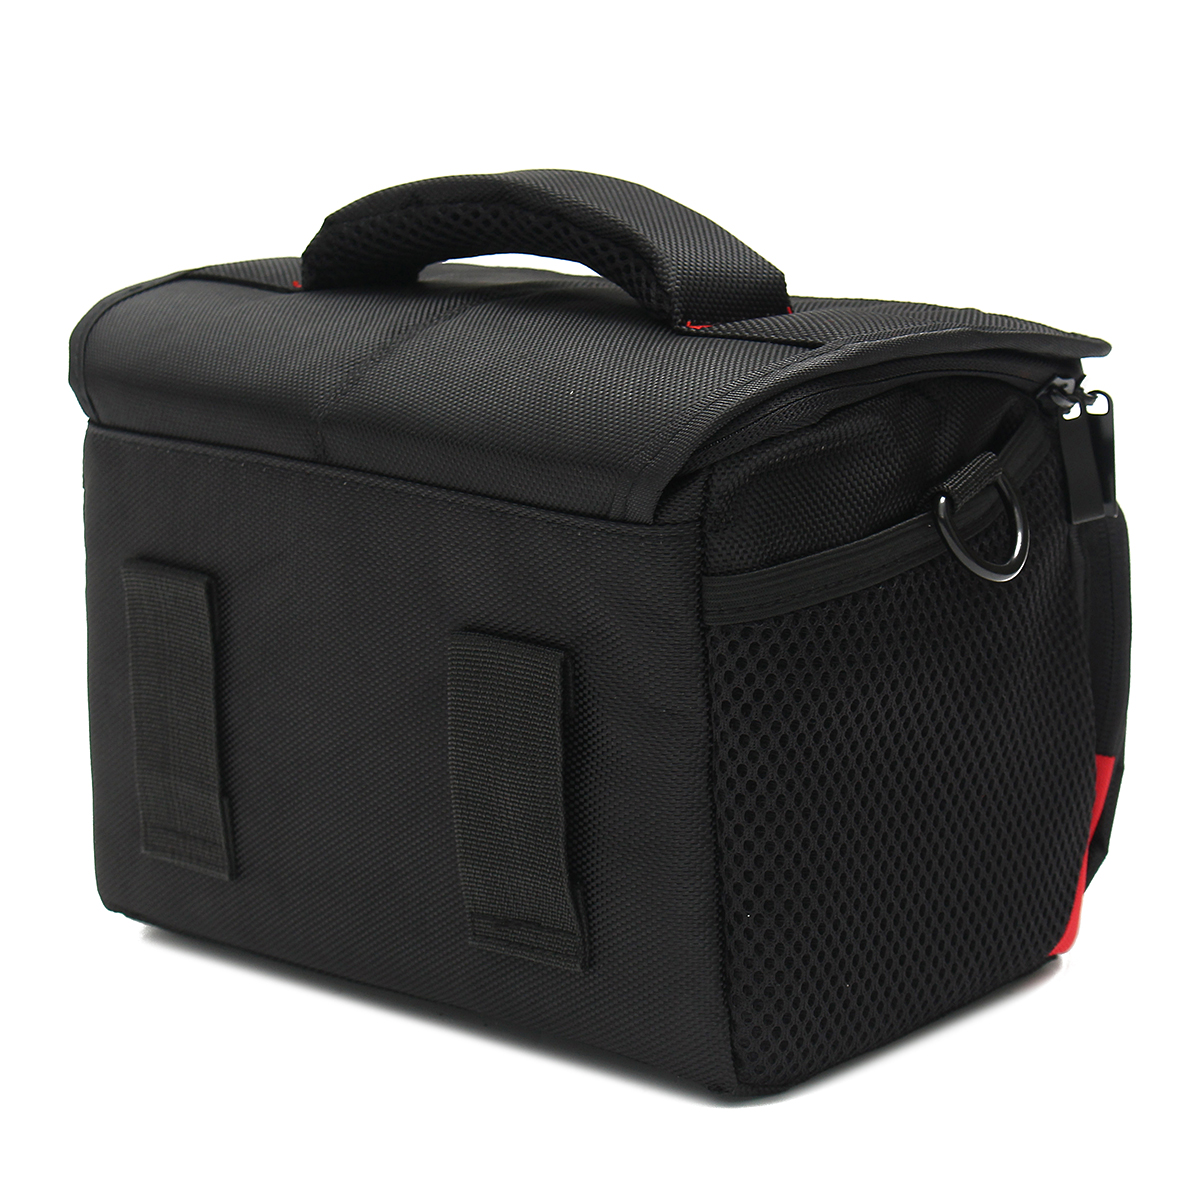 Waterproof-Camera-Shoulder-Bag-Travel-Carrying-Case-with-Rain-Cover-For-DSLR-SLR-Camera-Flash-Lens-1633799-4